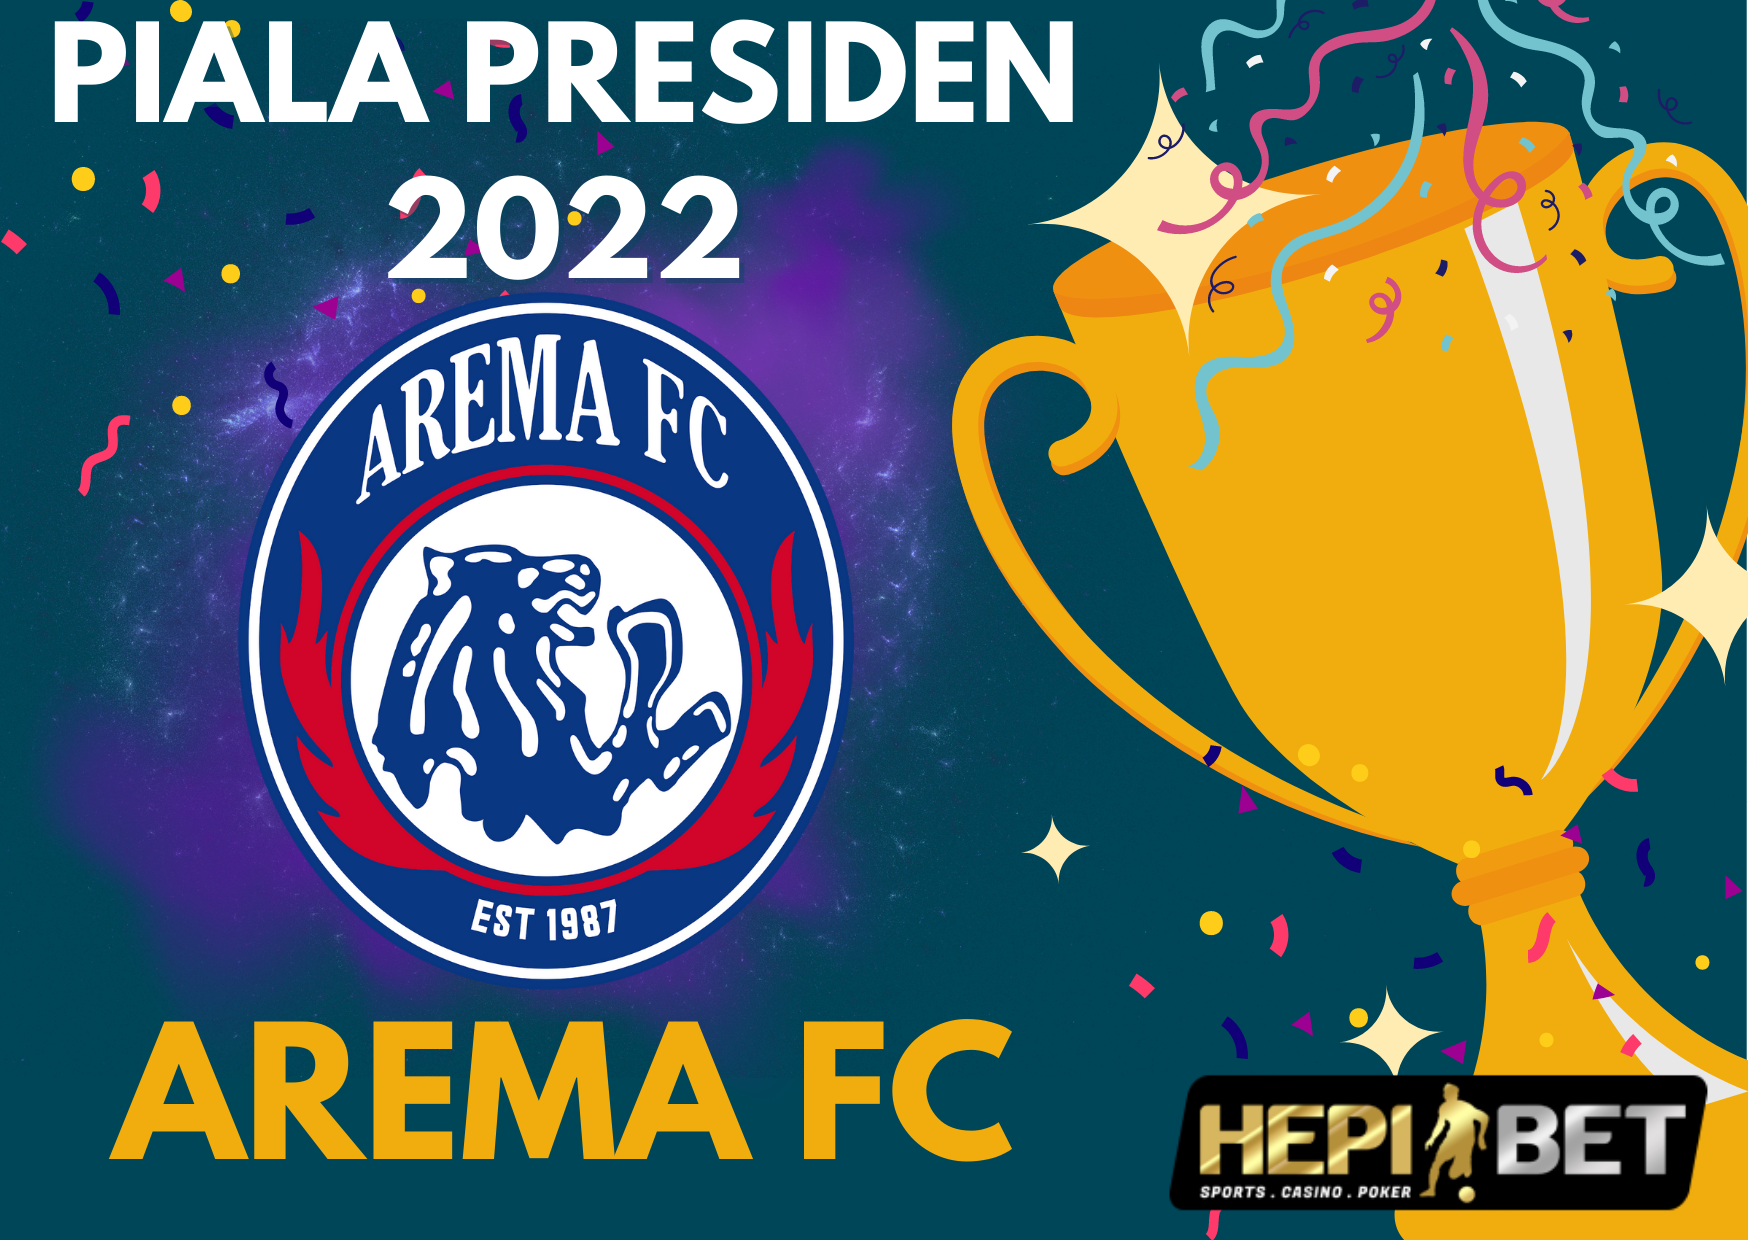 Arema fc juara Piala Presiden 2022